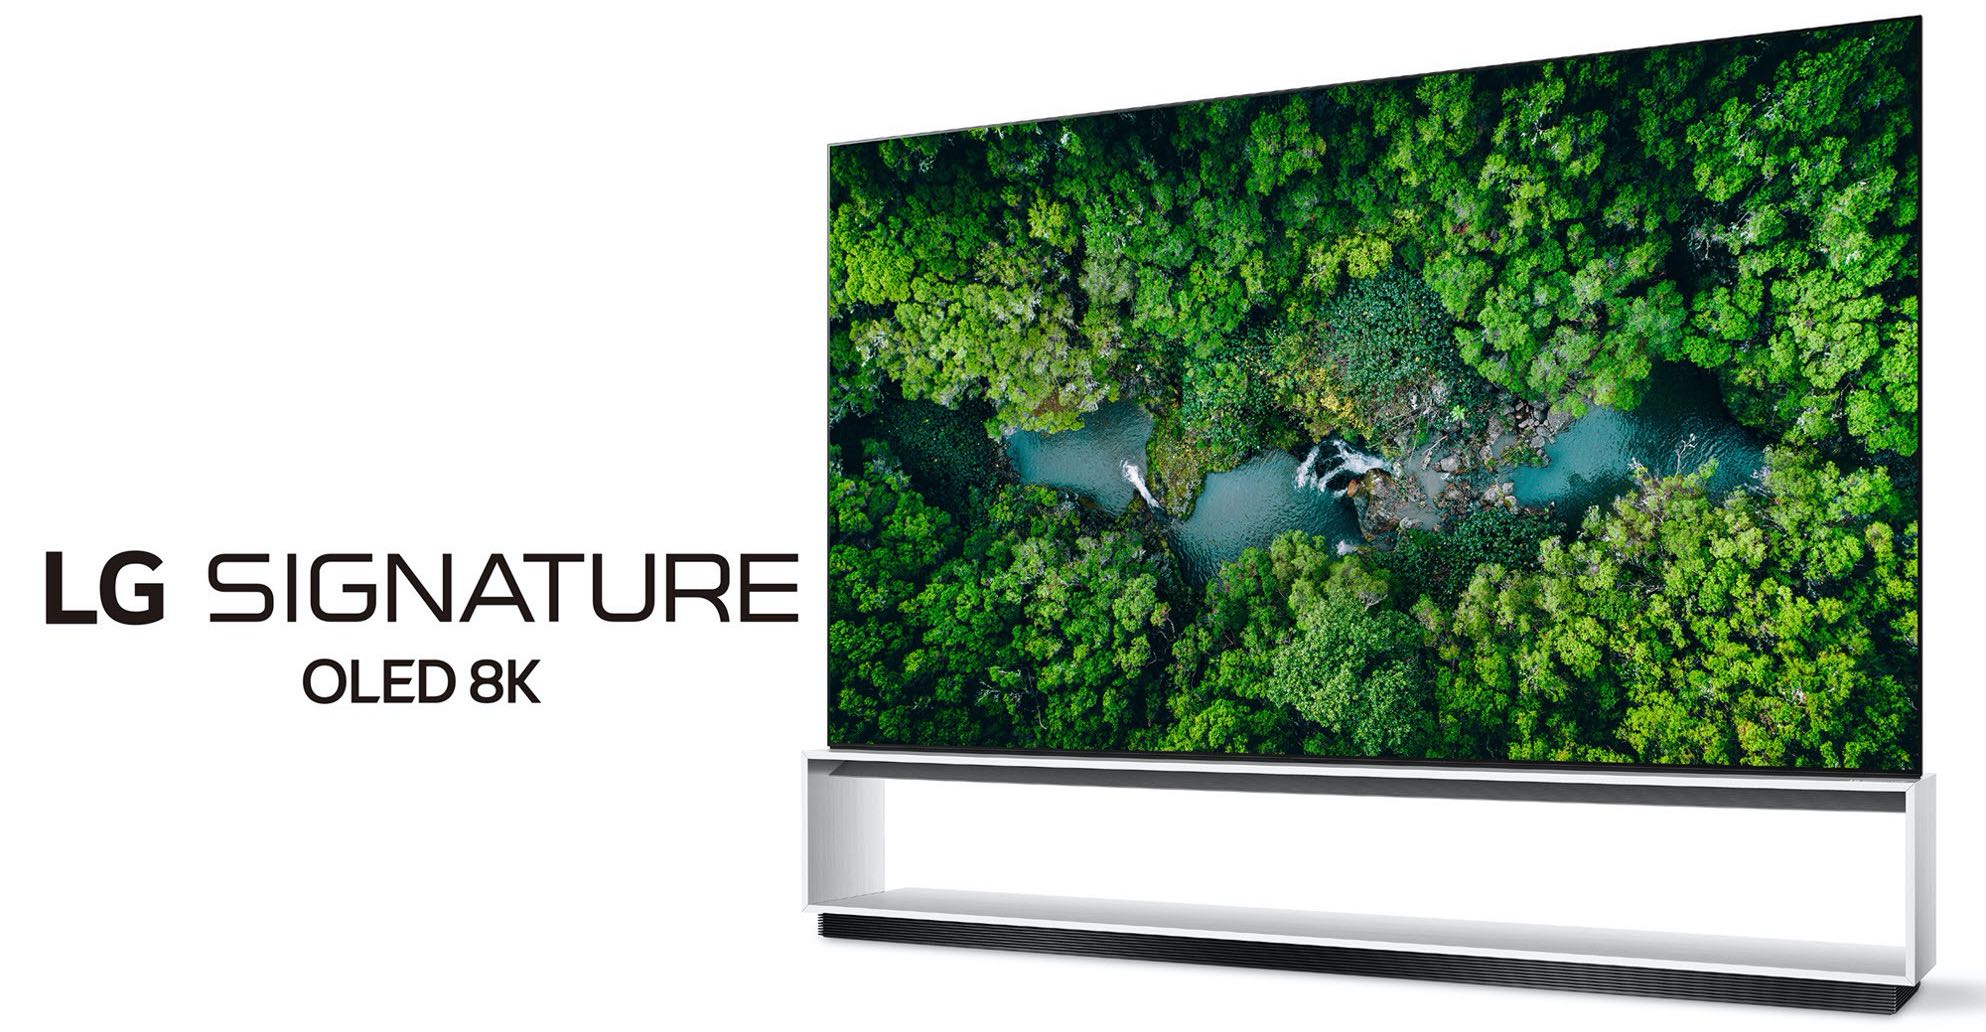 LG SIGNATURE OLED 8K TV 2020 image 001